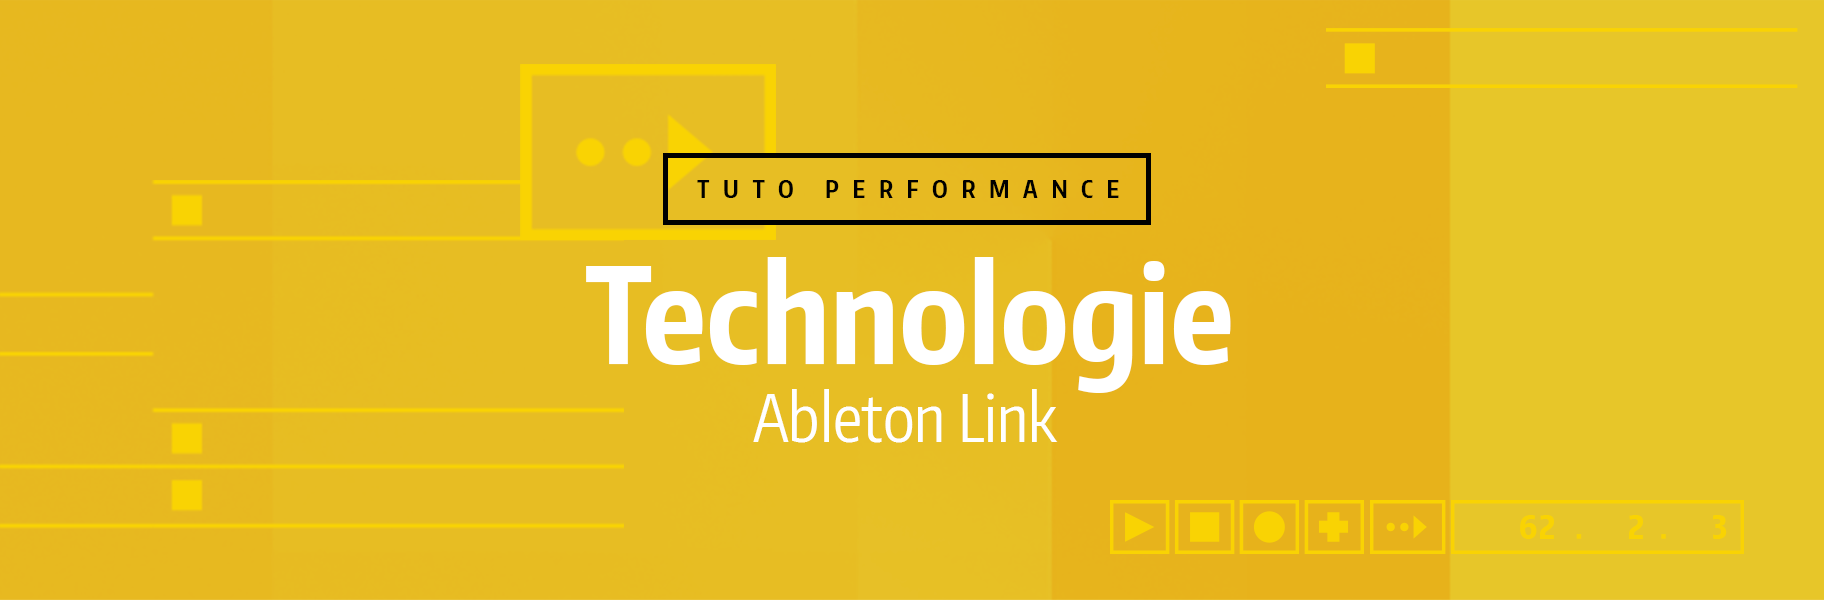 Tutoriel Ableton Live - Technologie Ableton Link